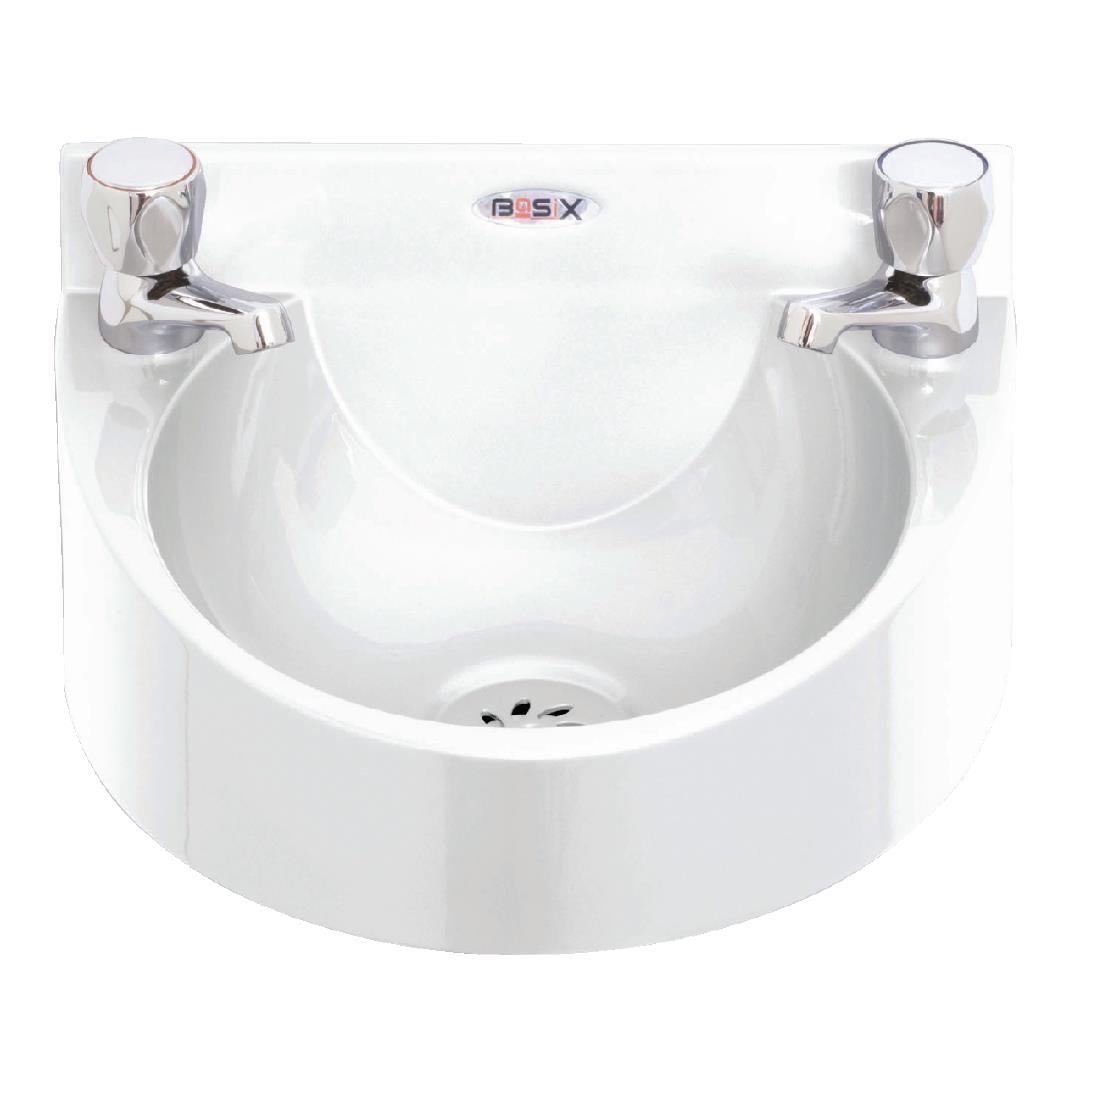 Basix Polycarbonate Wash Hand Basin White - CE987  - 1